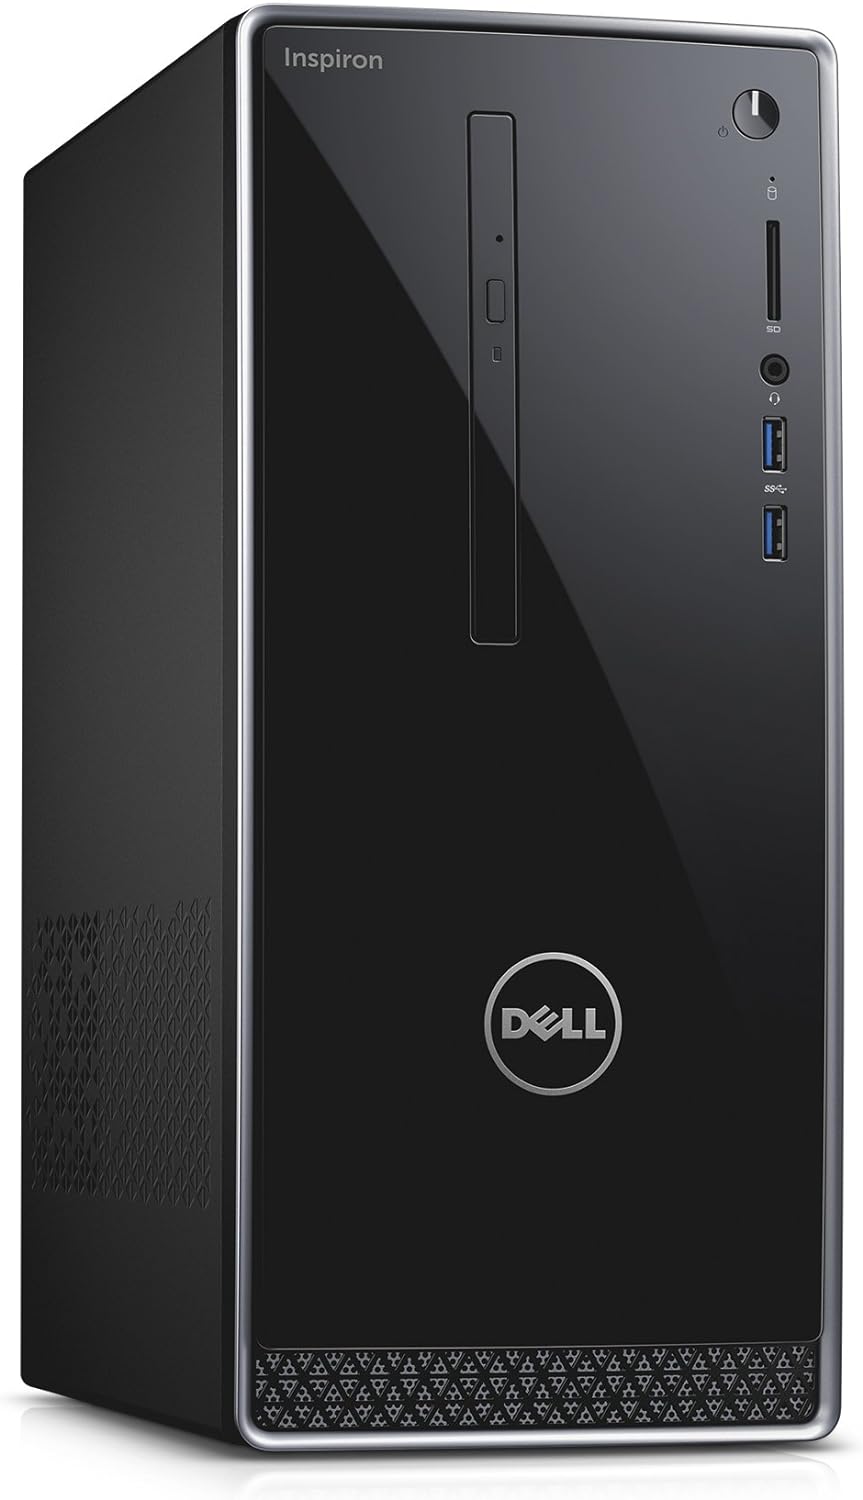 PC Desktop Dell Inspiron 3650 (i5-6ta 8GB 240GB SSD) Reacondicionado Grado A